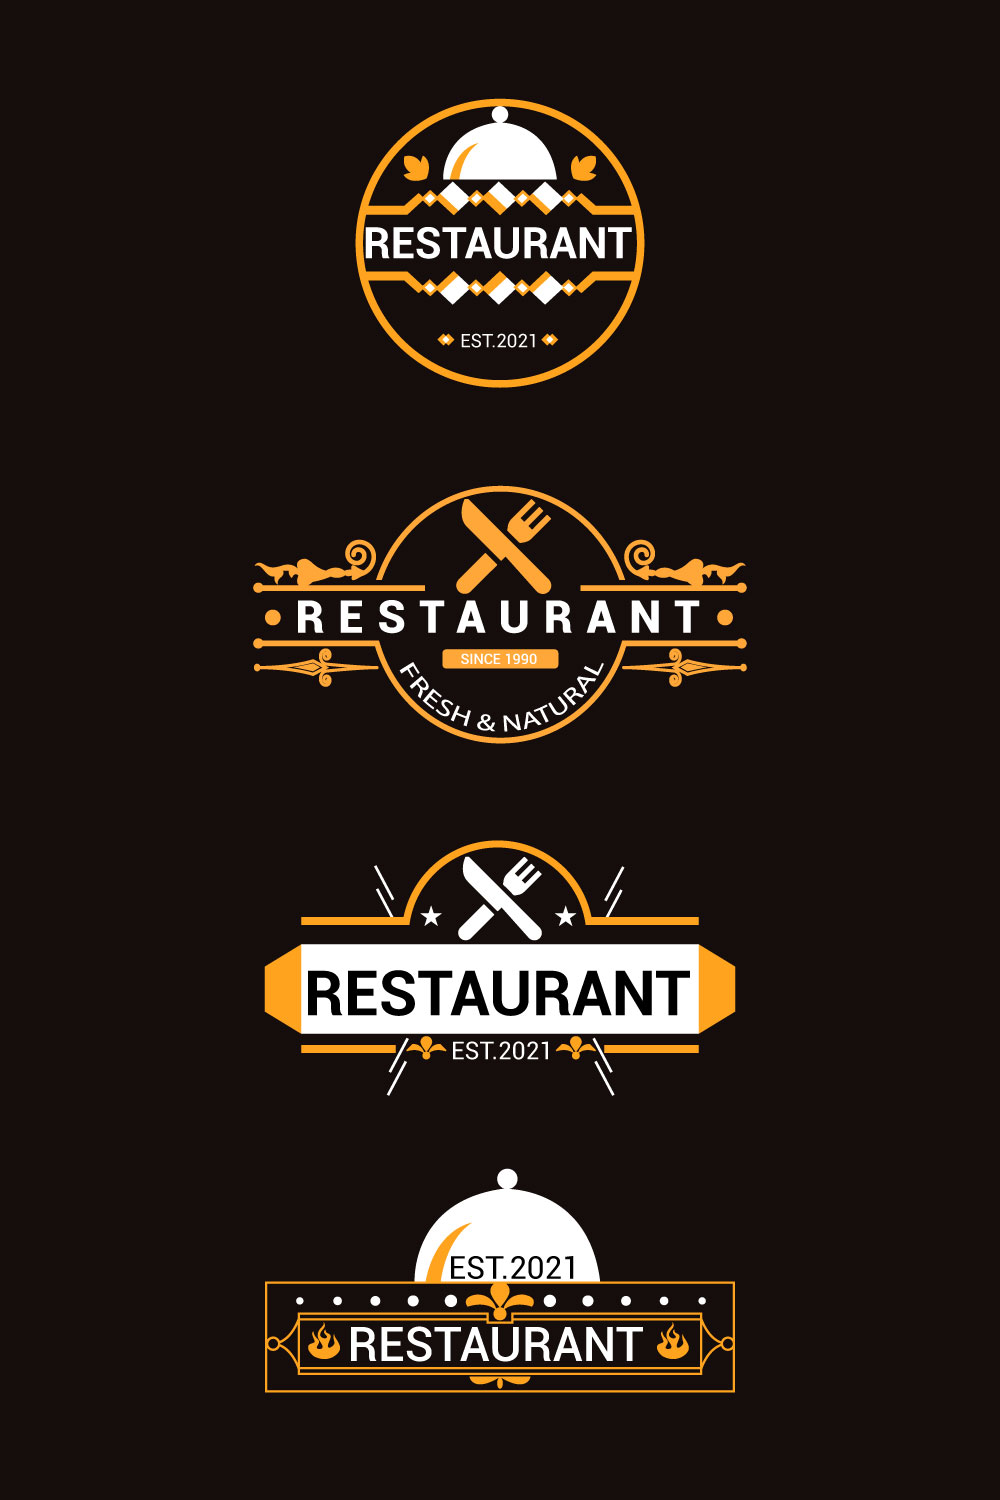 Restaurant logo vintage And retro Vector Bundle pinterest preview image.